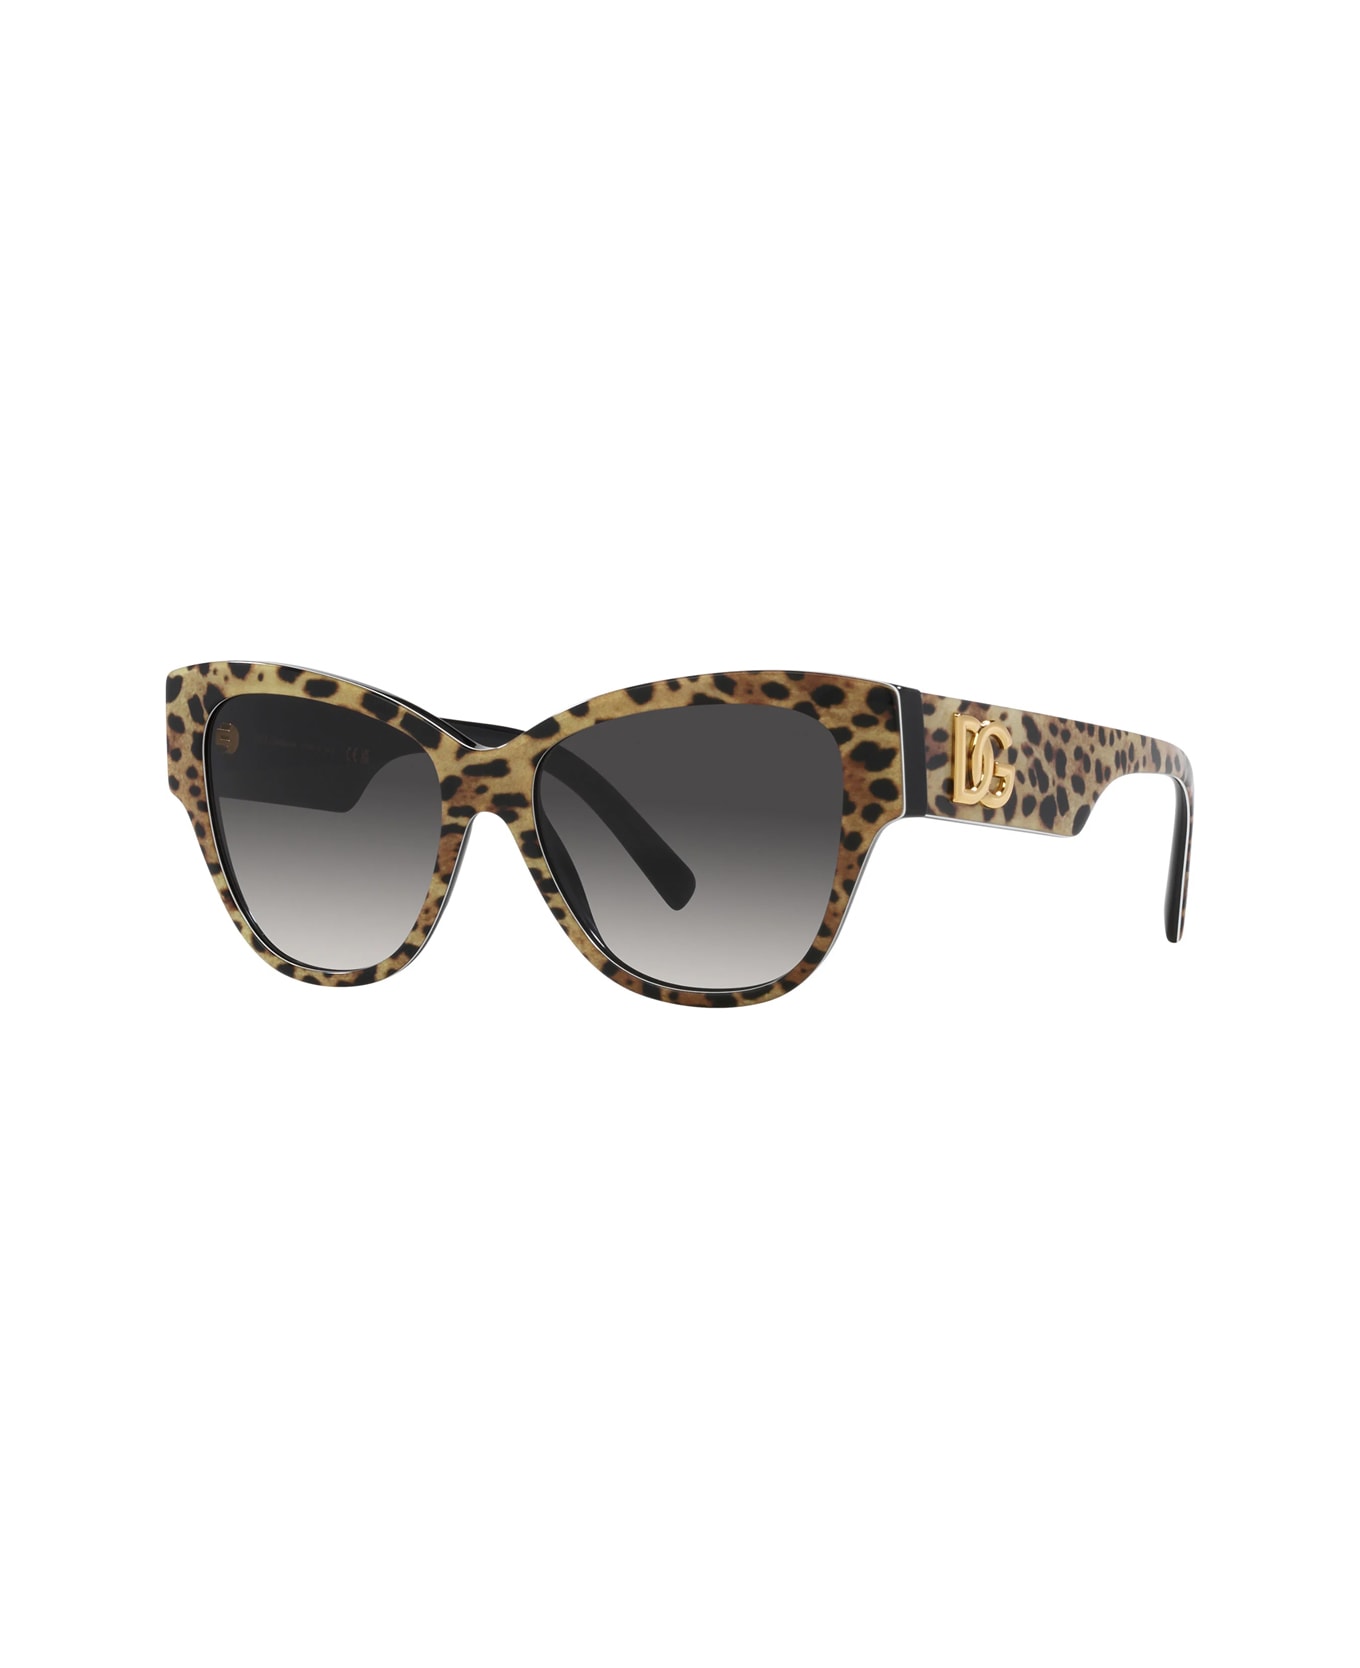 Dolce & Gabbana Eyewear Dg4449 31638g Sunglasses - Beige